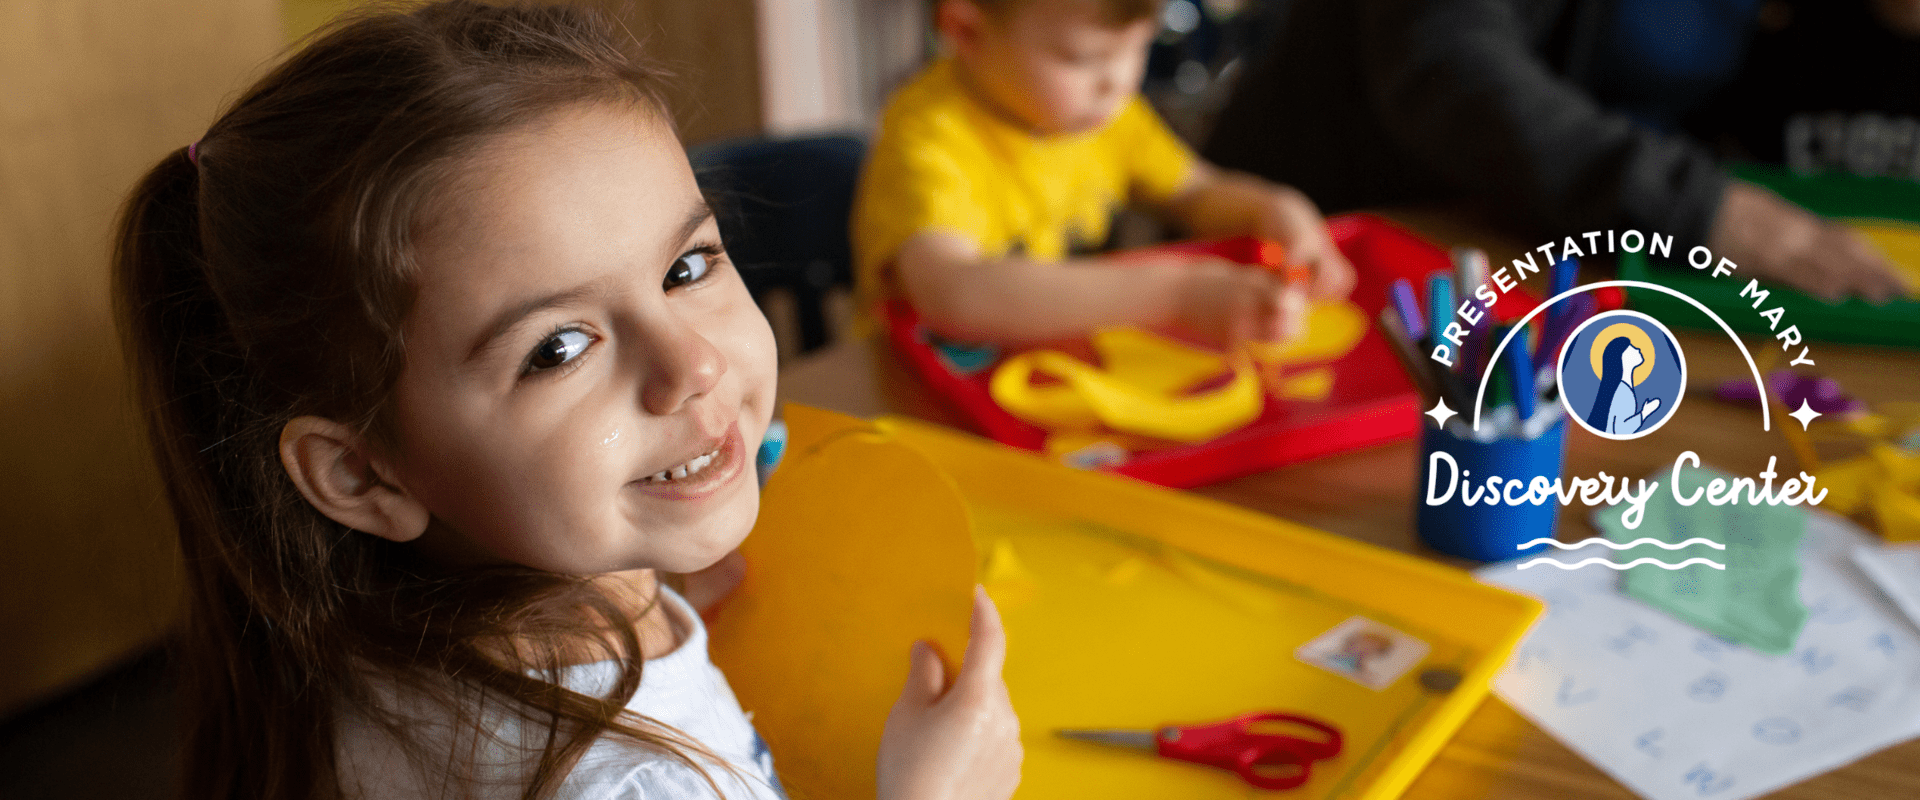 preschool girl smiling while coloring